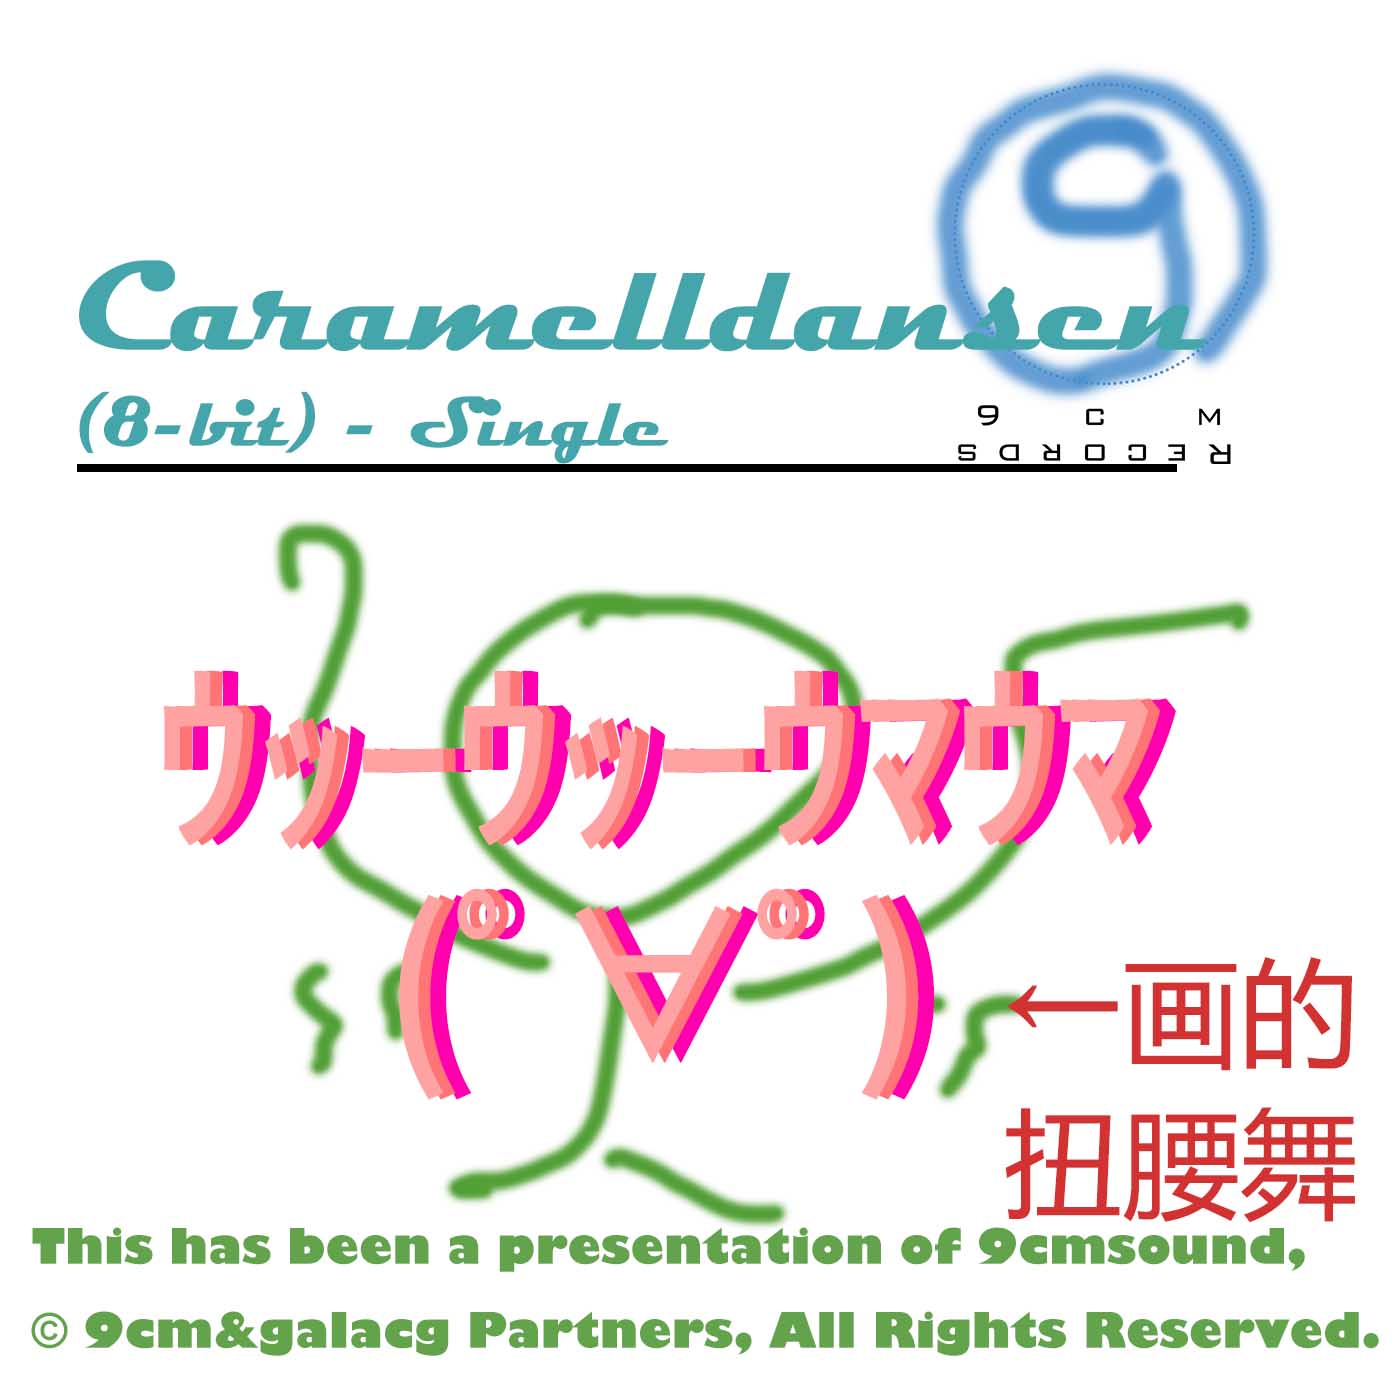 8-bit Caramelldansen (Demo)[Bonus Track]